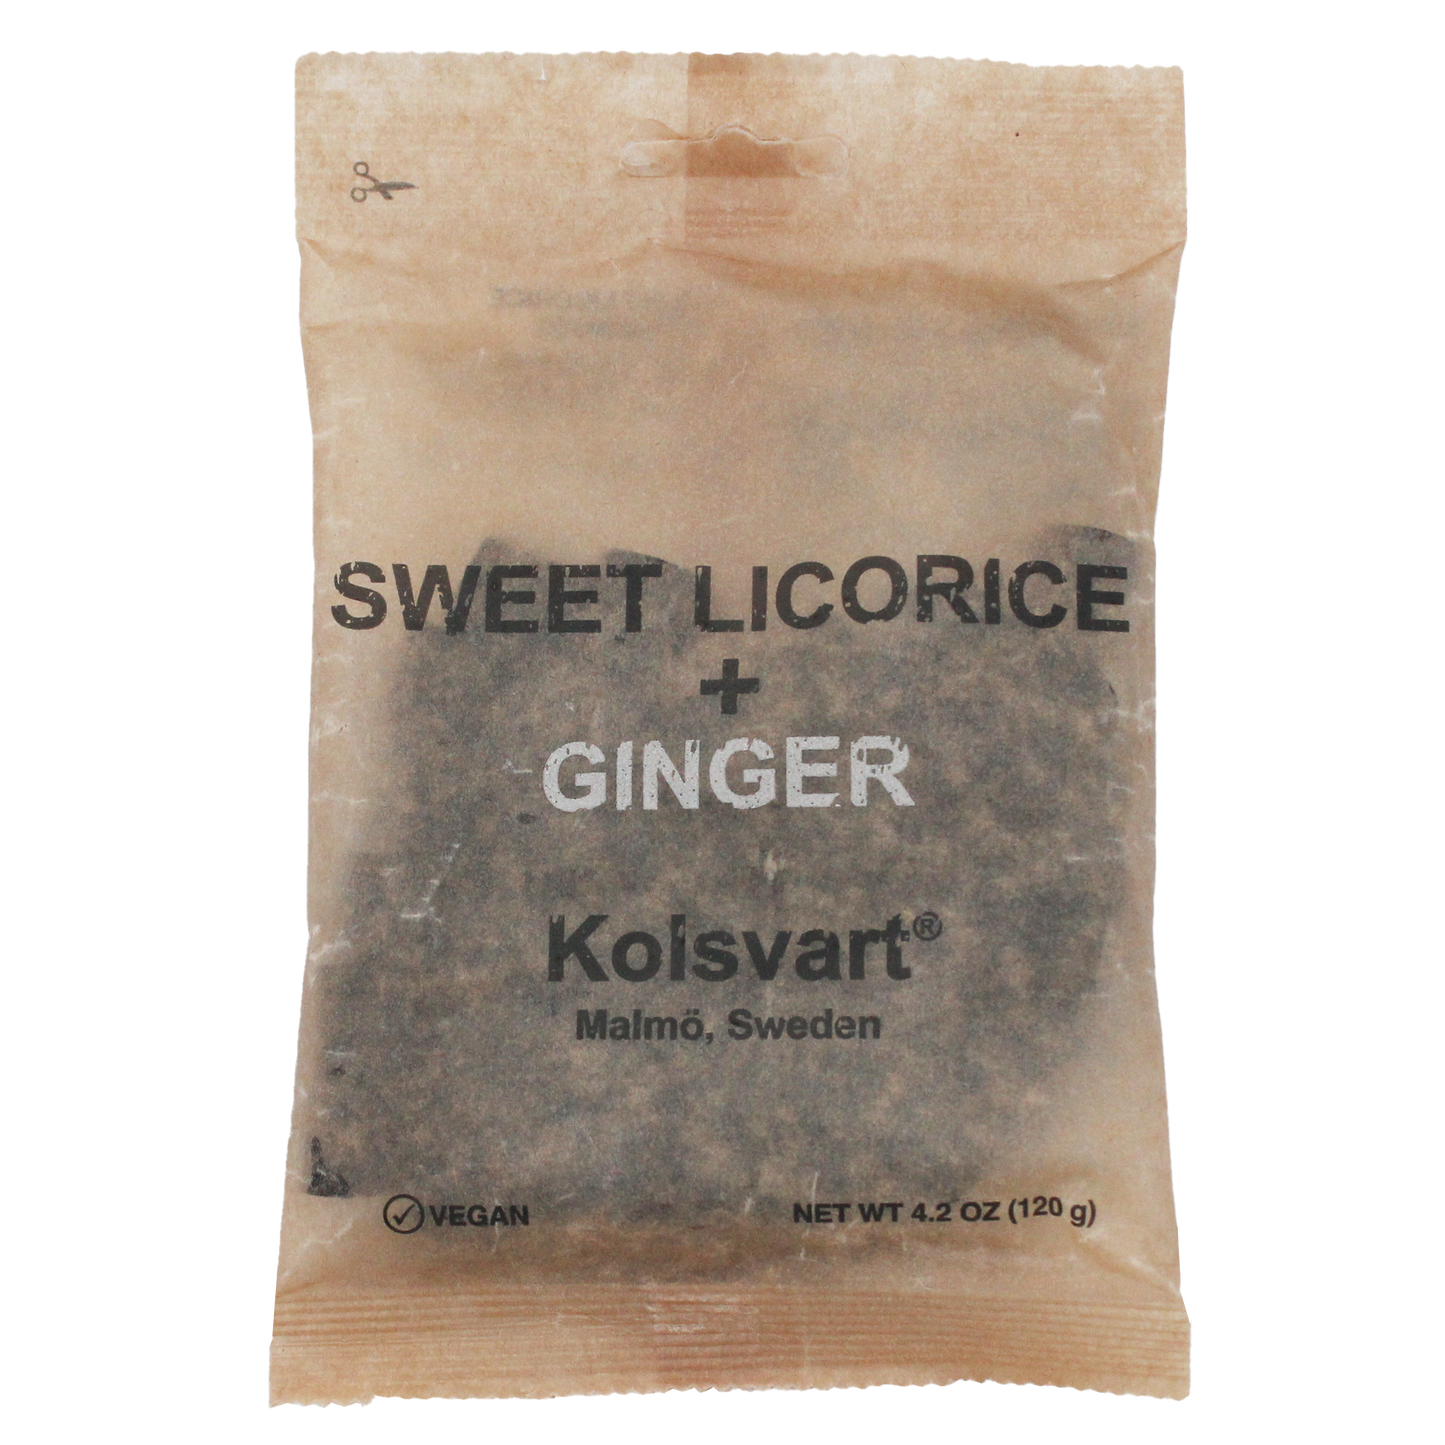 Sweet and Ginger Swedish Licorice - 4.2oz (120gm)